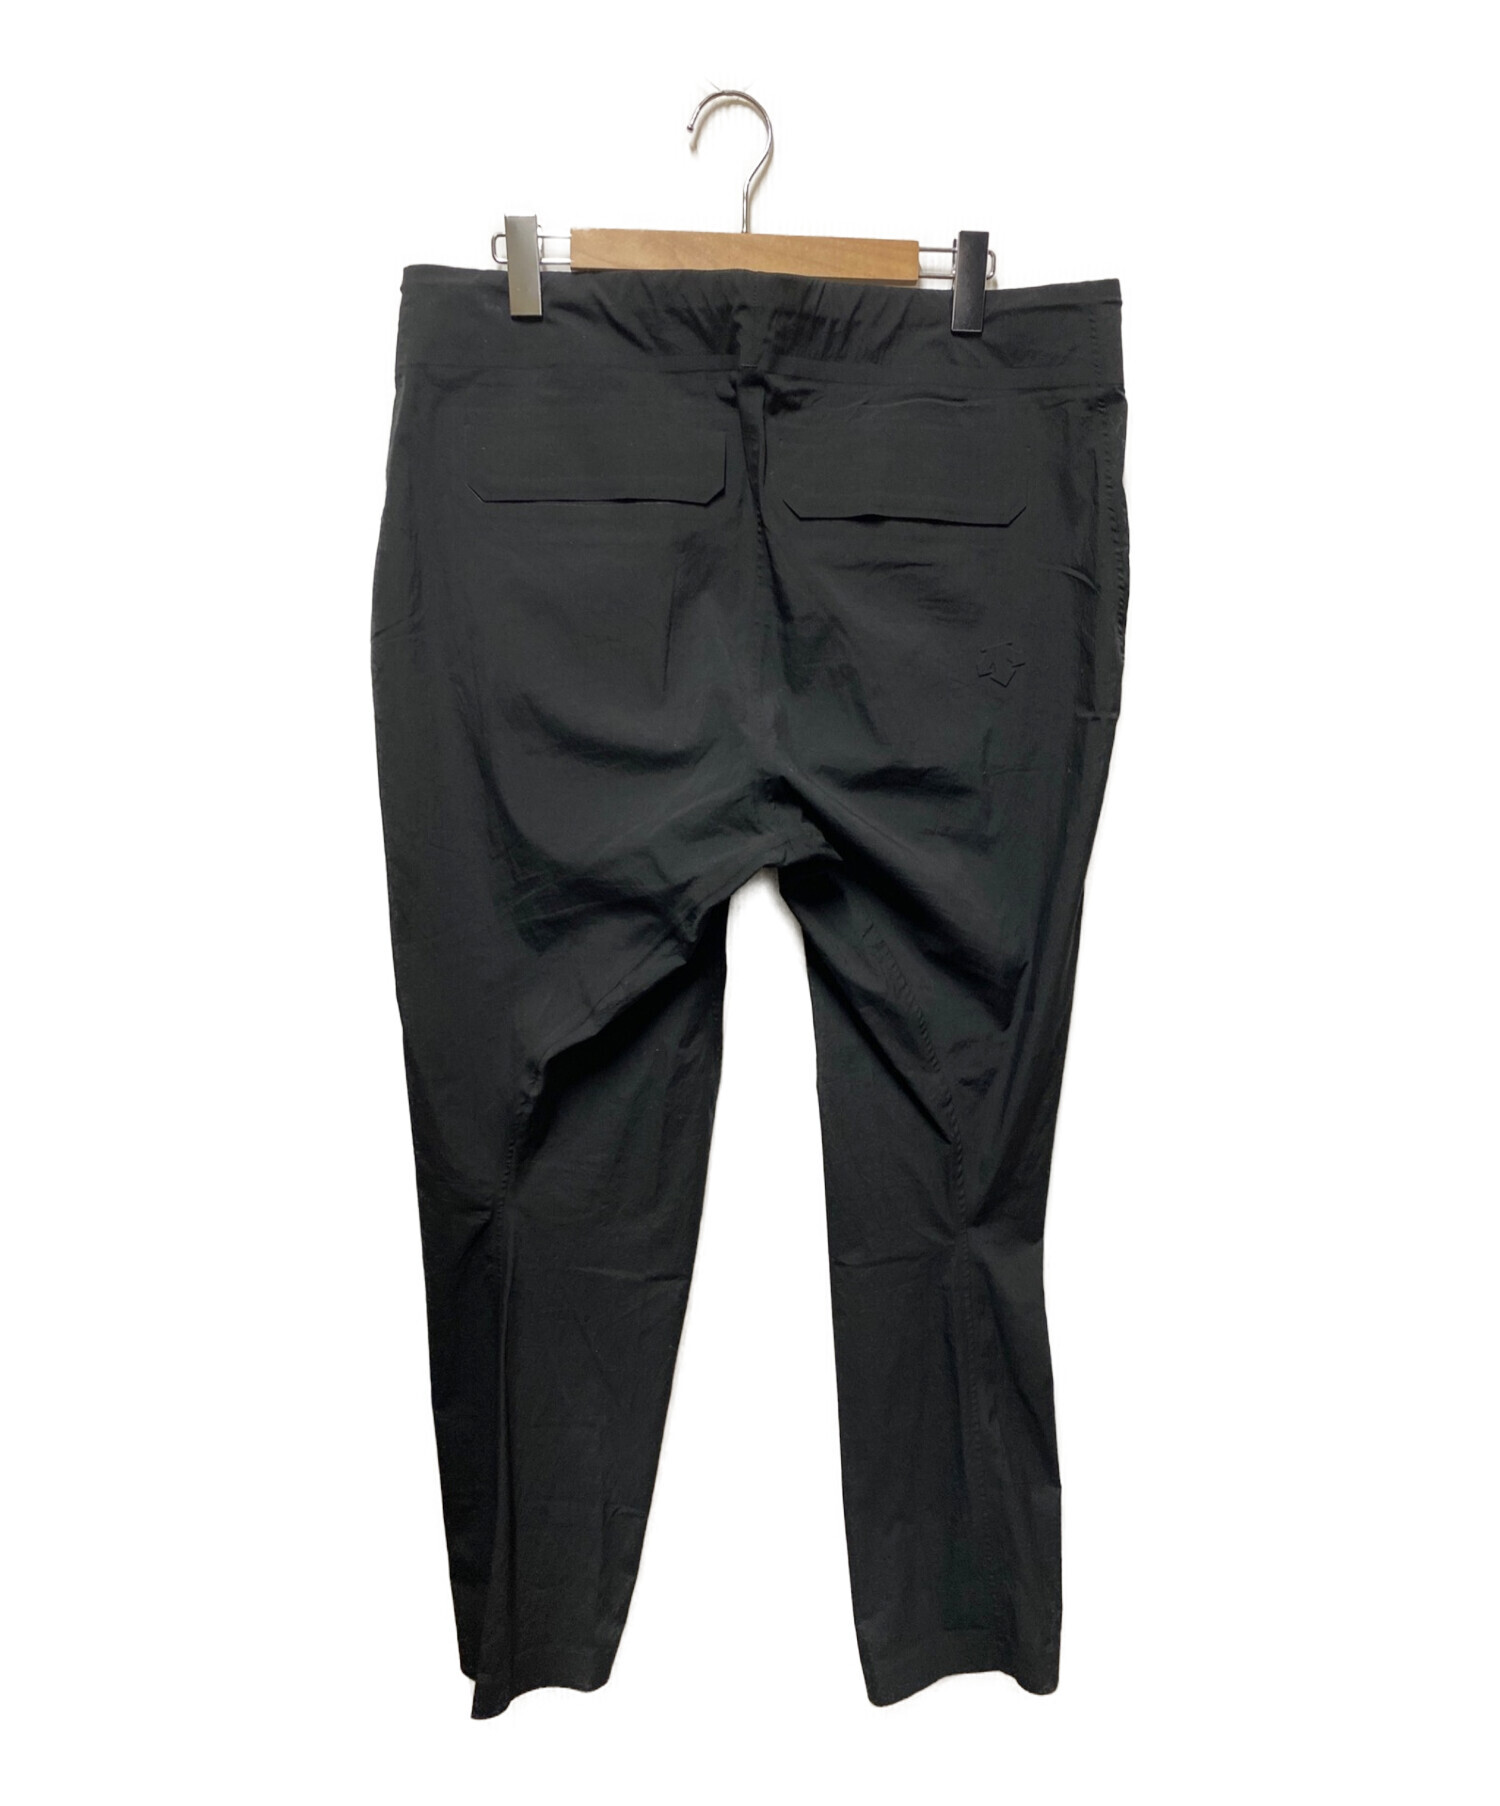 DESCENTE ALLTERRAIN (デザイント オルテライン) RELAXED FIT TAPERED PANTS ブラック サイズ:W36